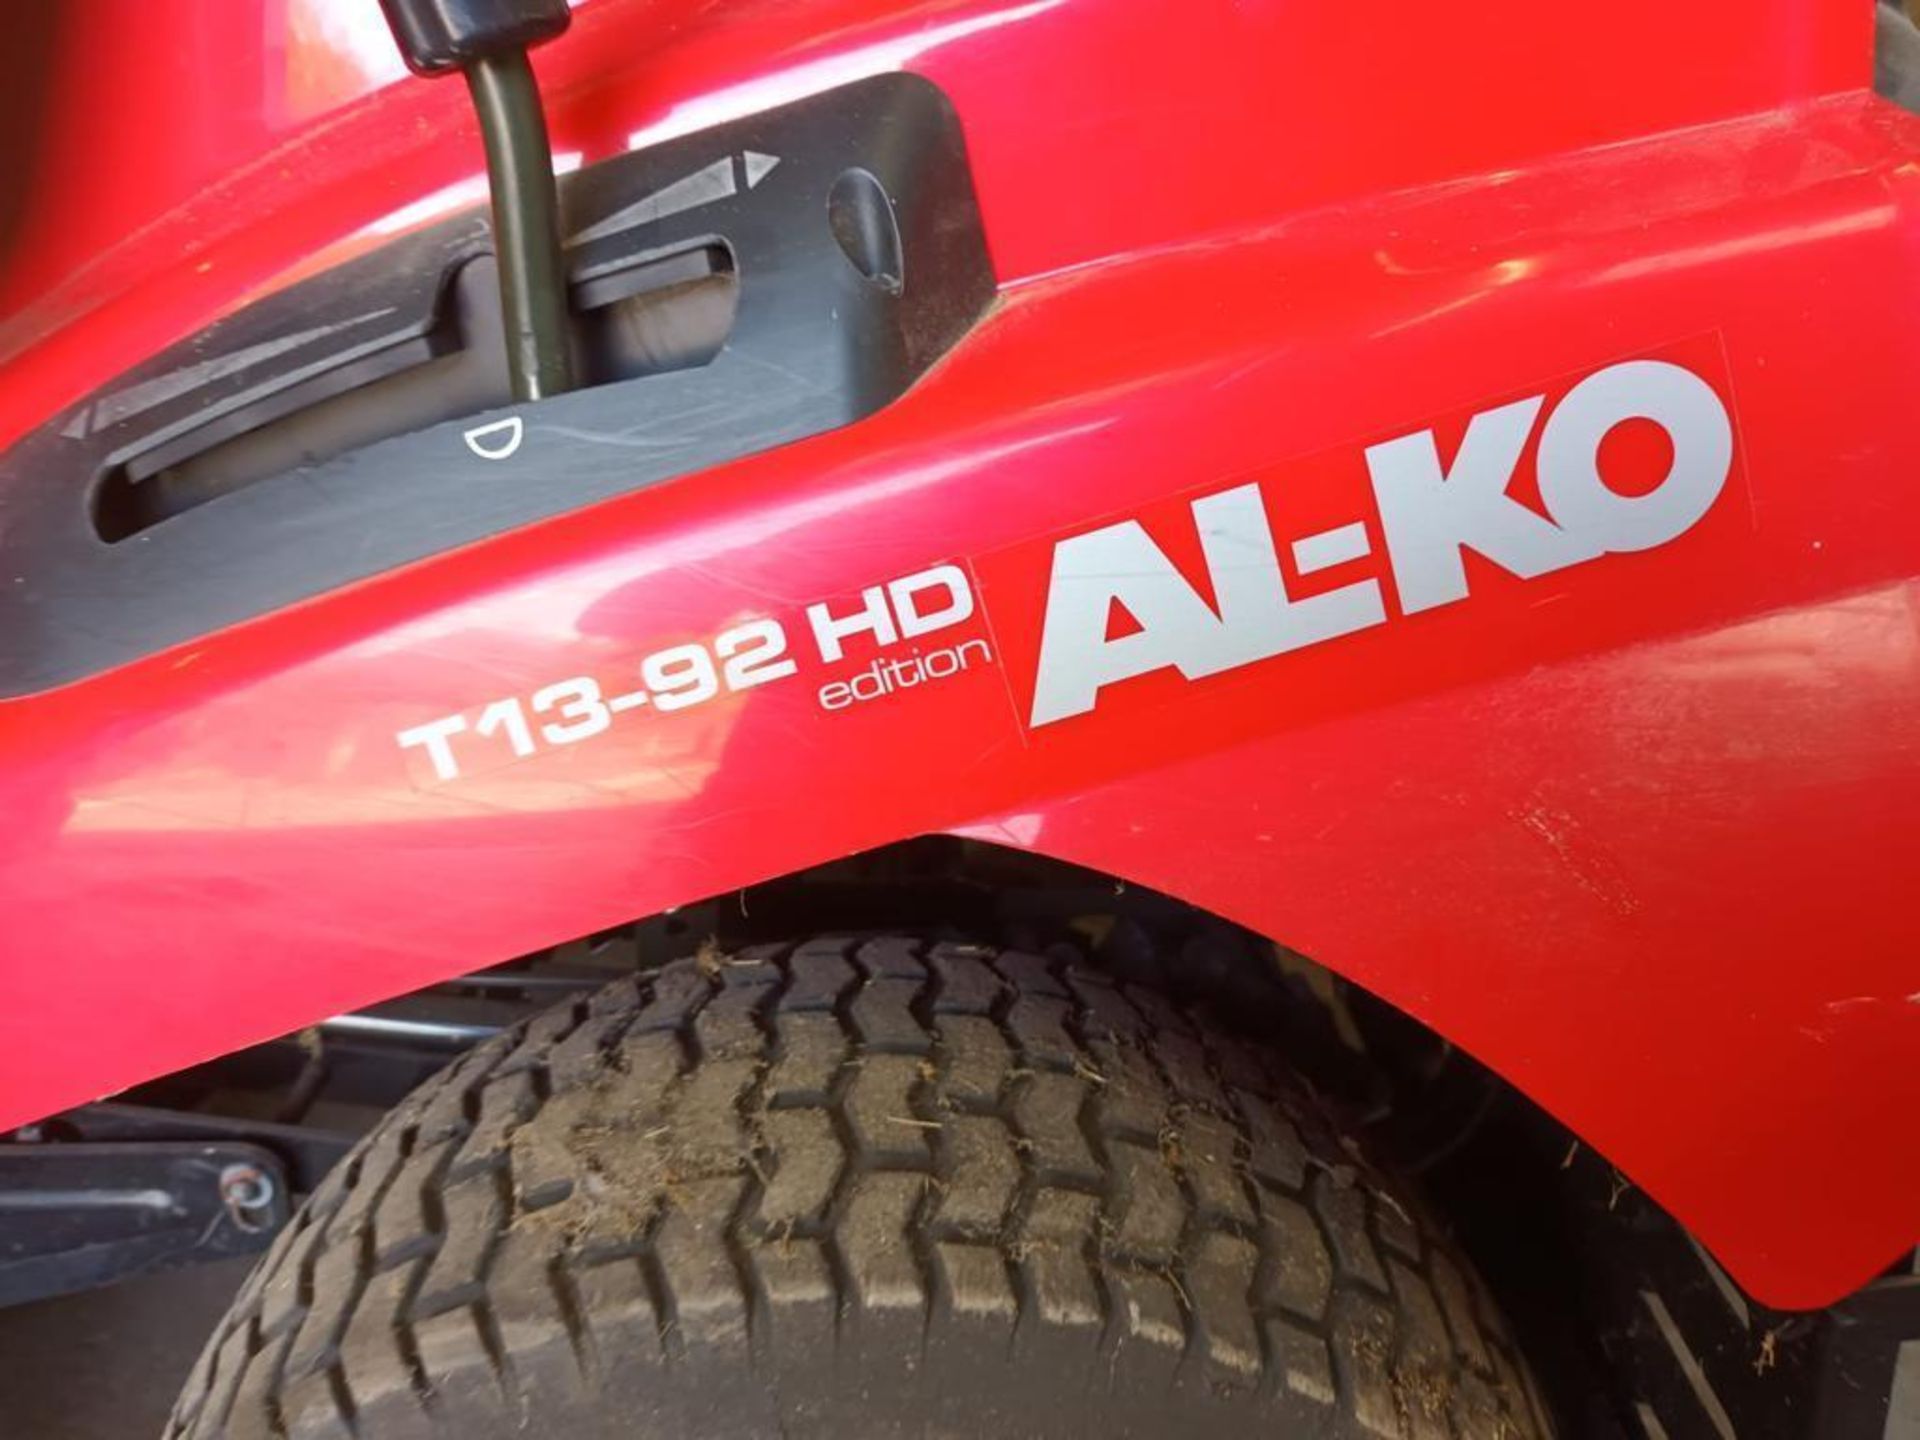 AL-KO Powerline T13-92HD Edition ride on lawn mower - Image 4 of 5